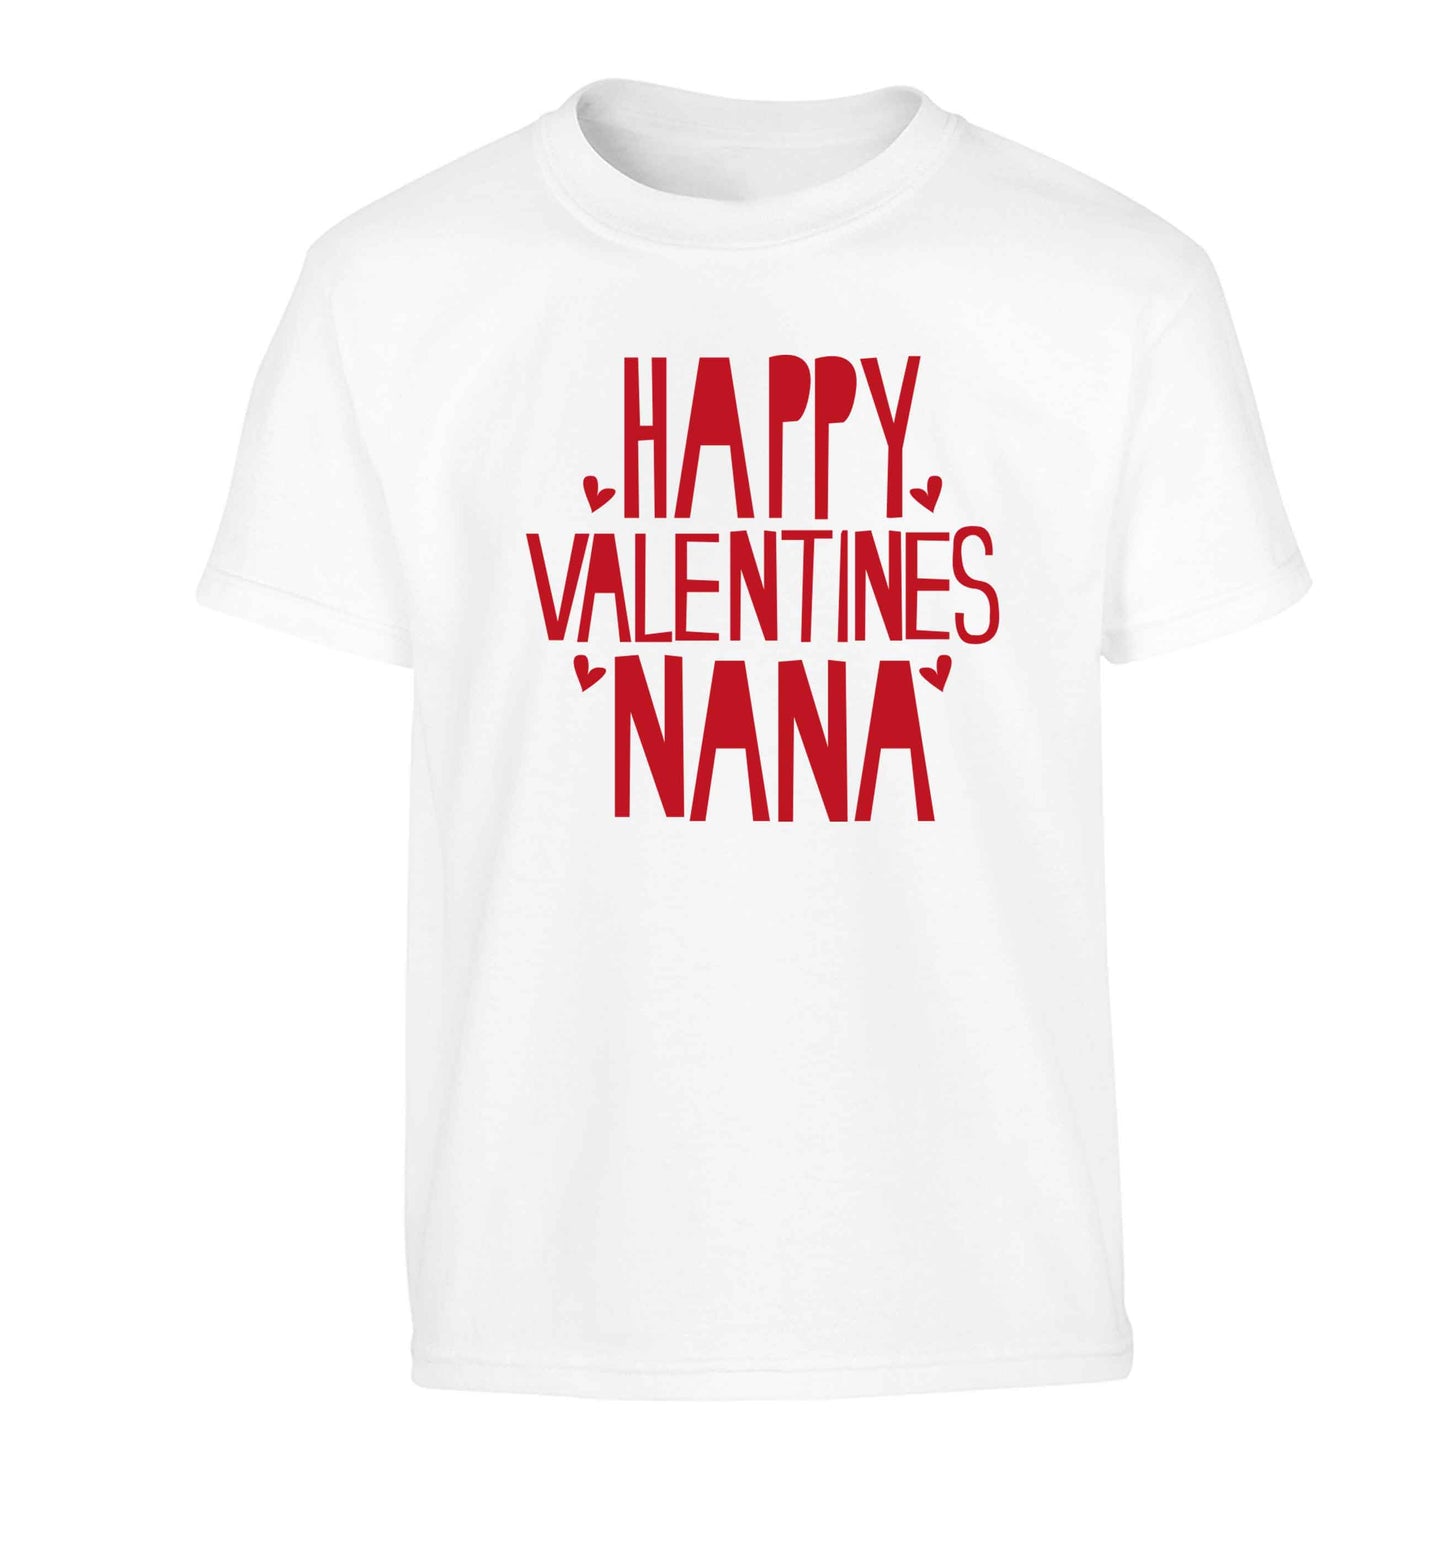 Happy valentines nana Children's white Tshirt 12-13 Years